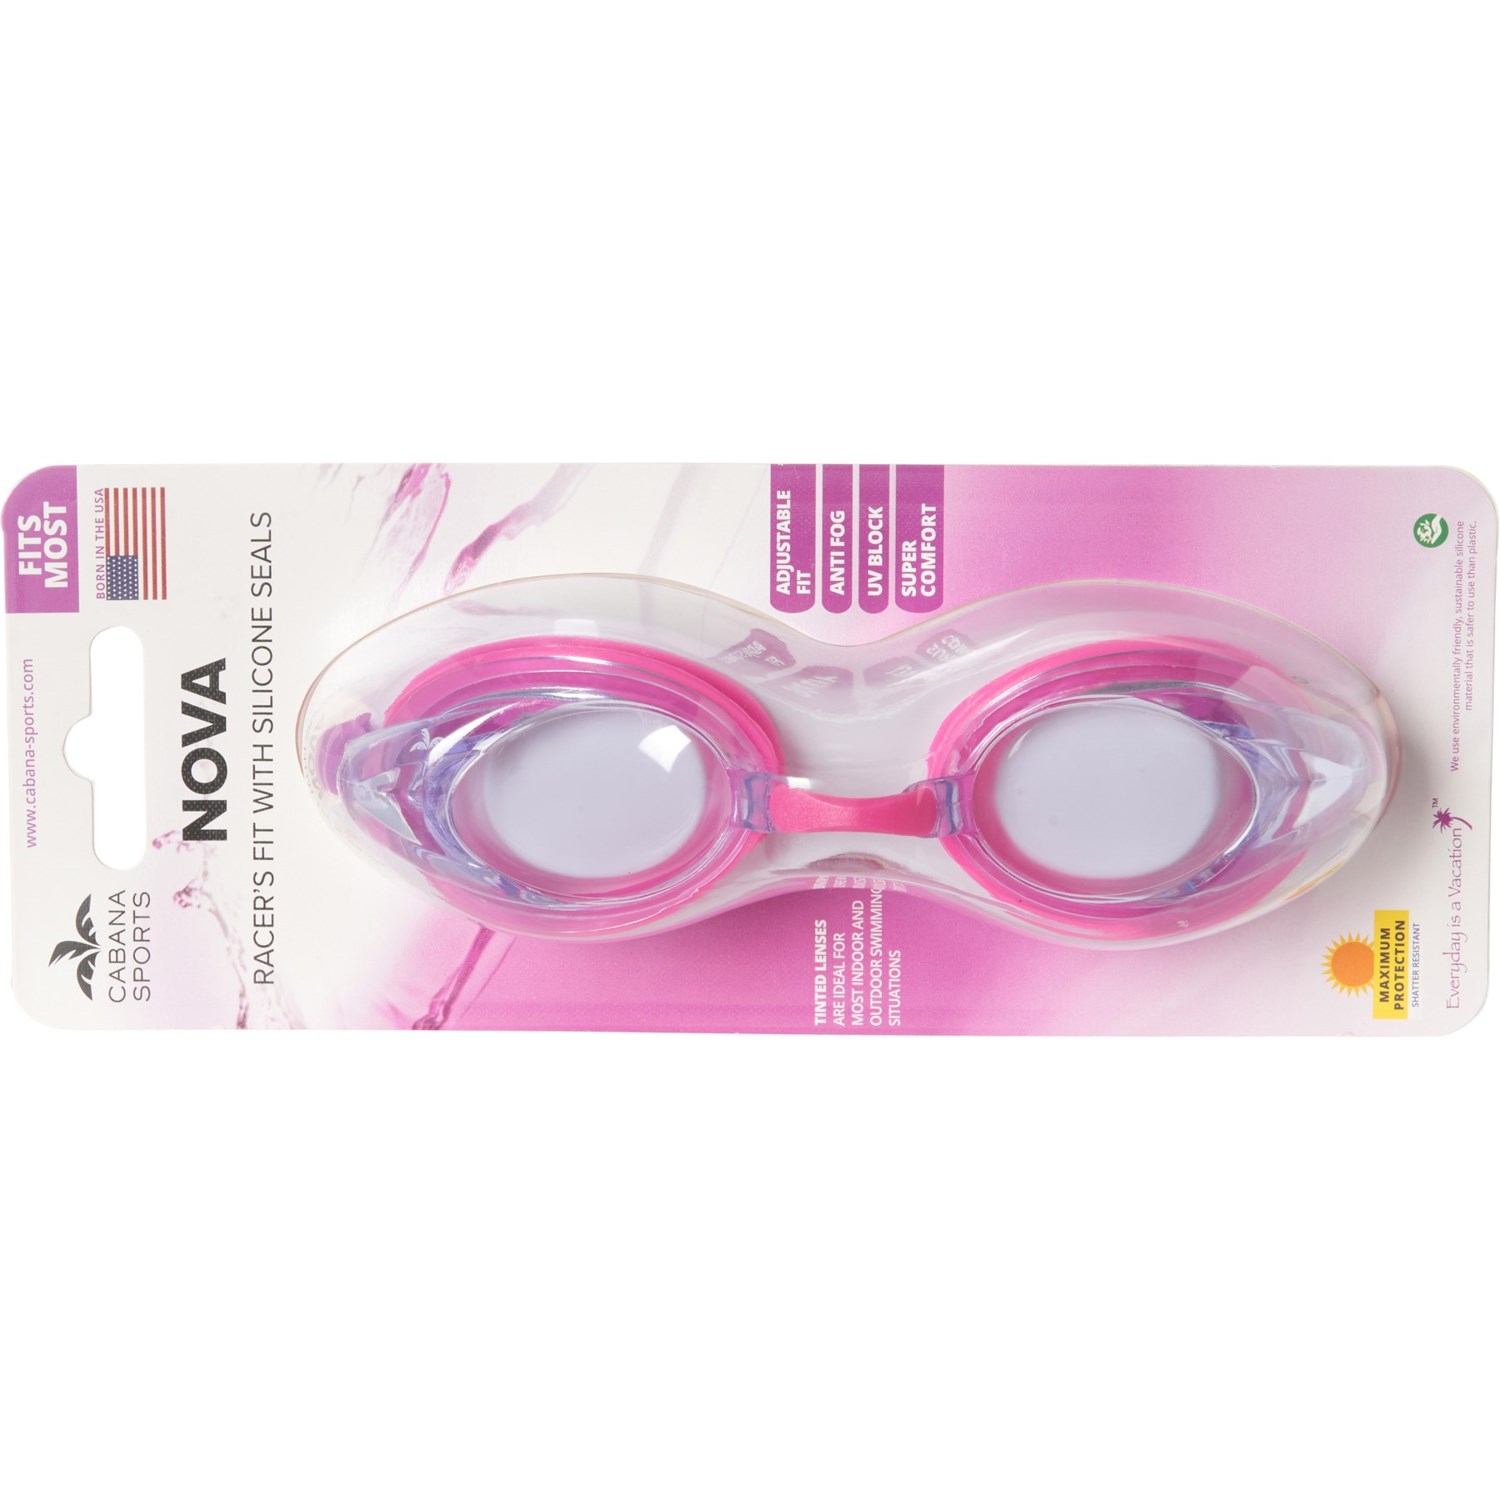 Cabana Sports Nova Swim Goggles (For Men and Women) - Save 25%